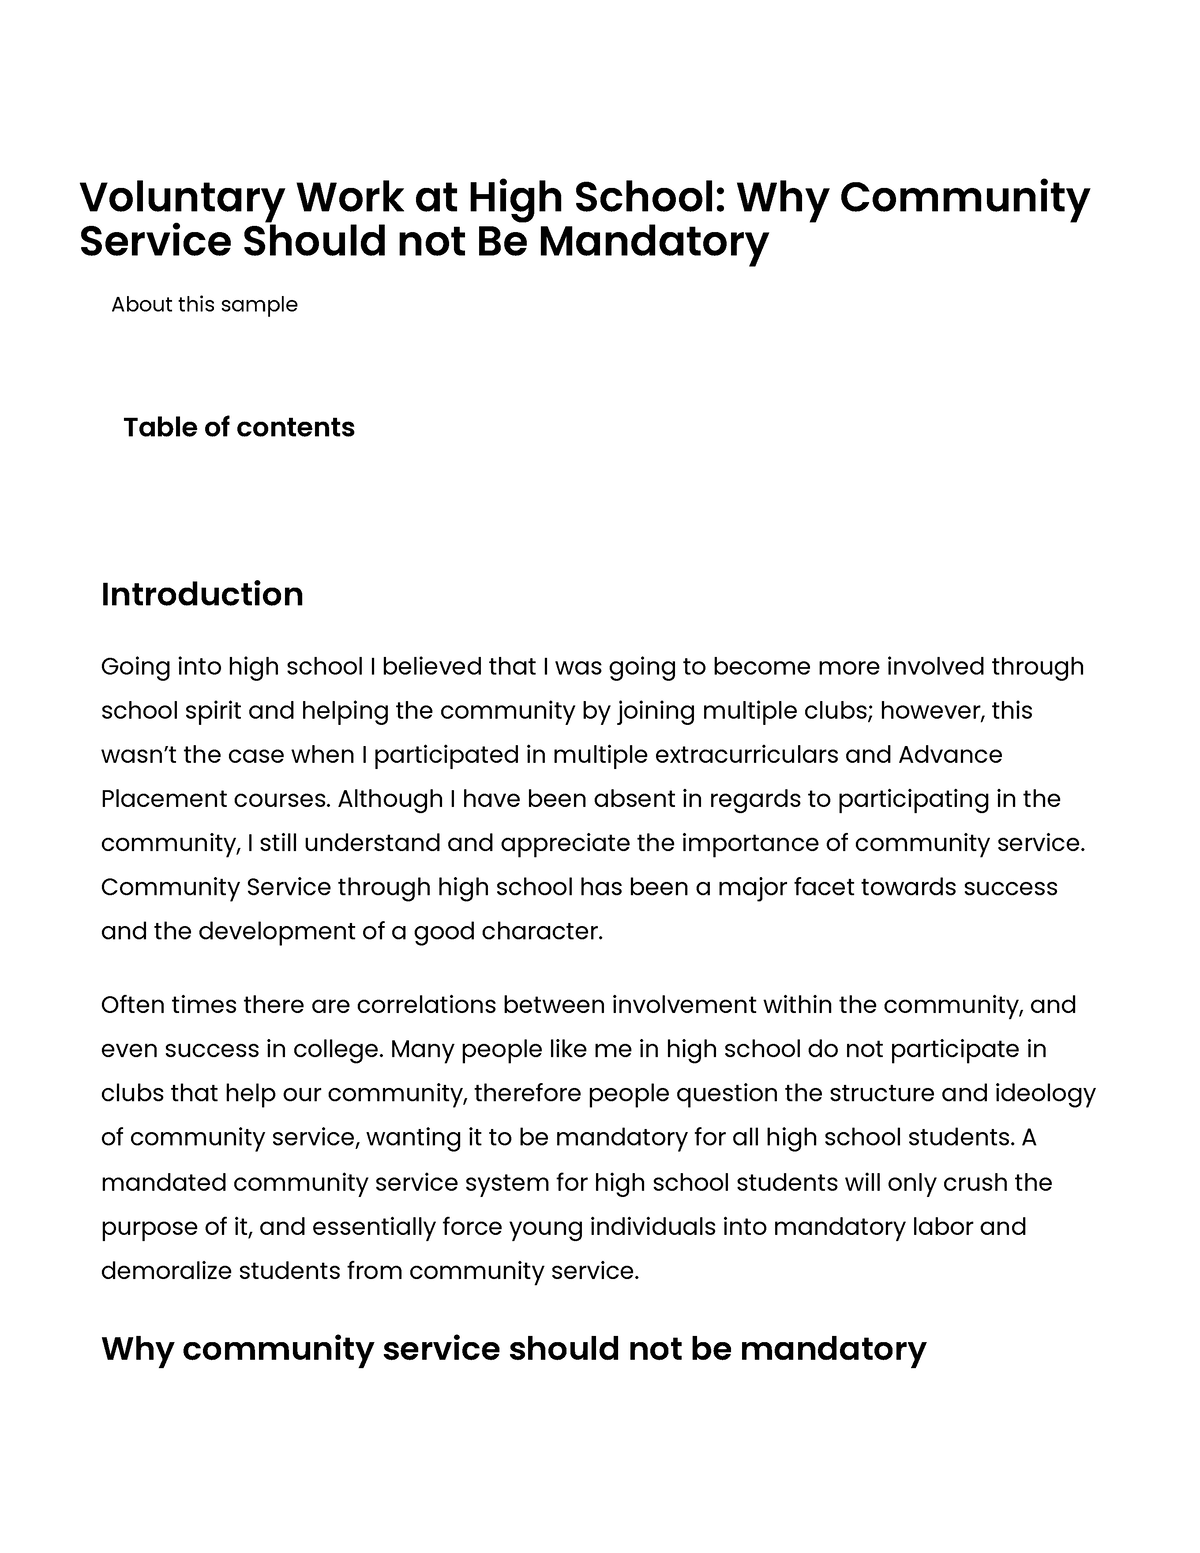 why community service should not be mandatory essay